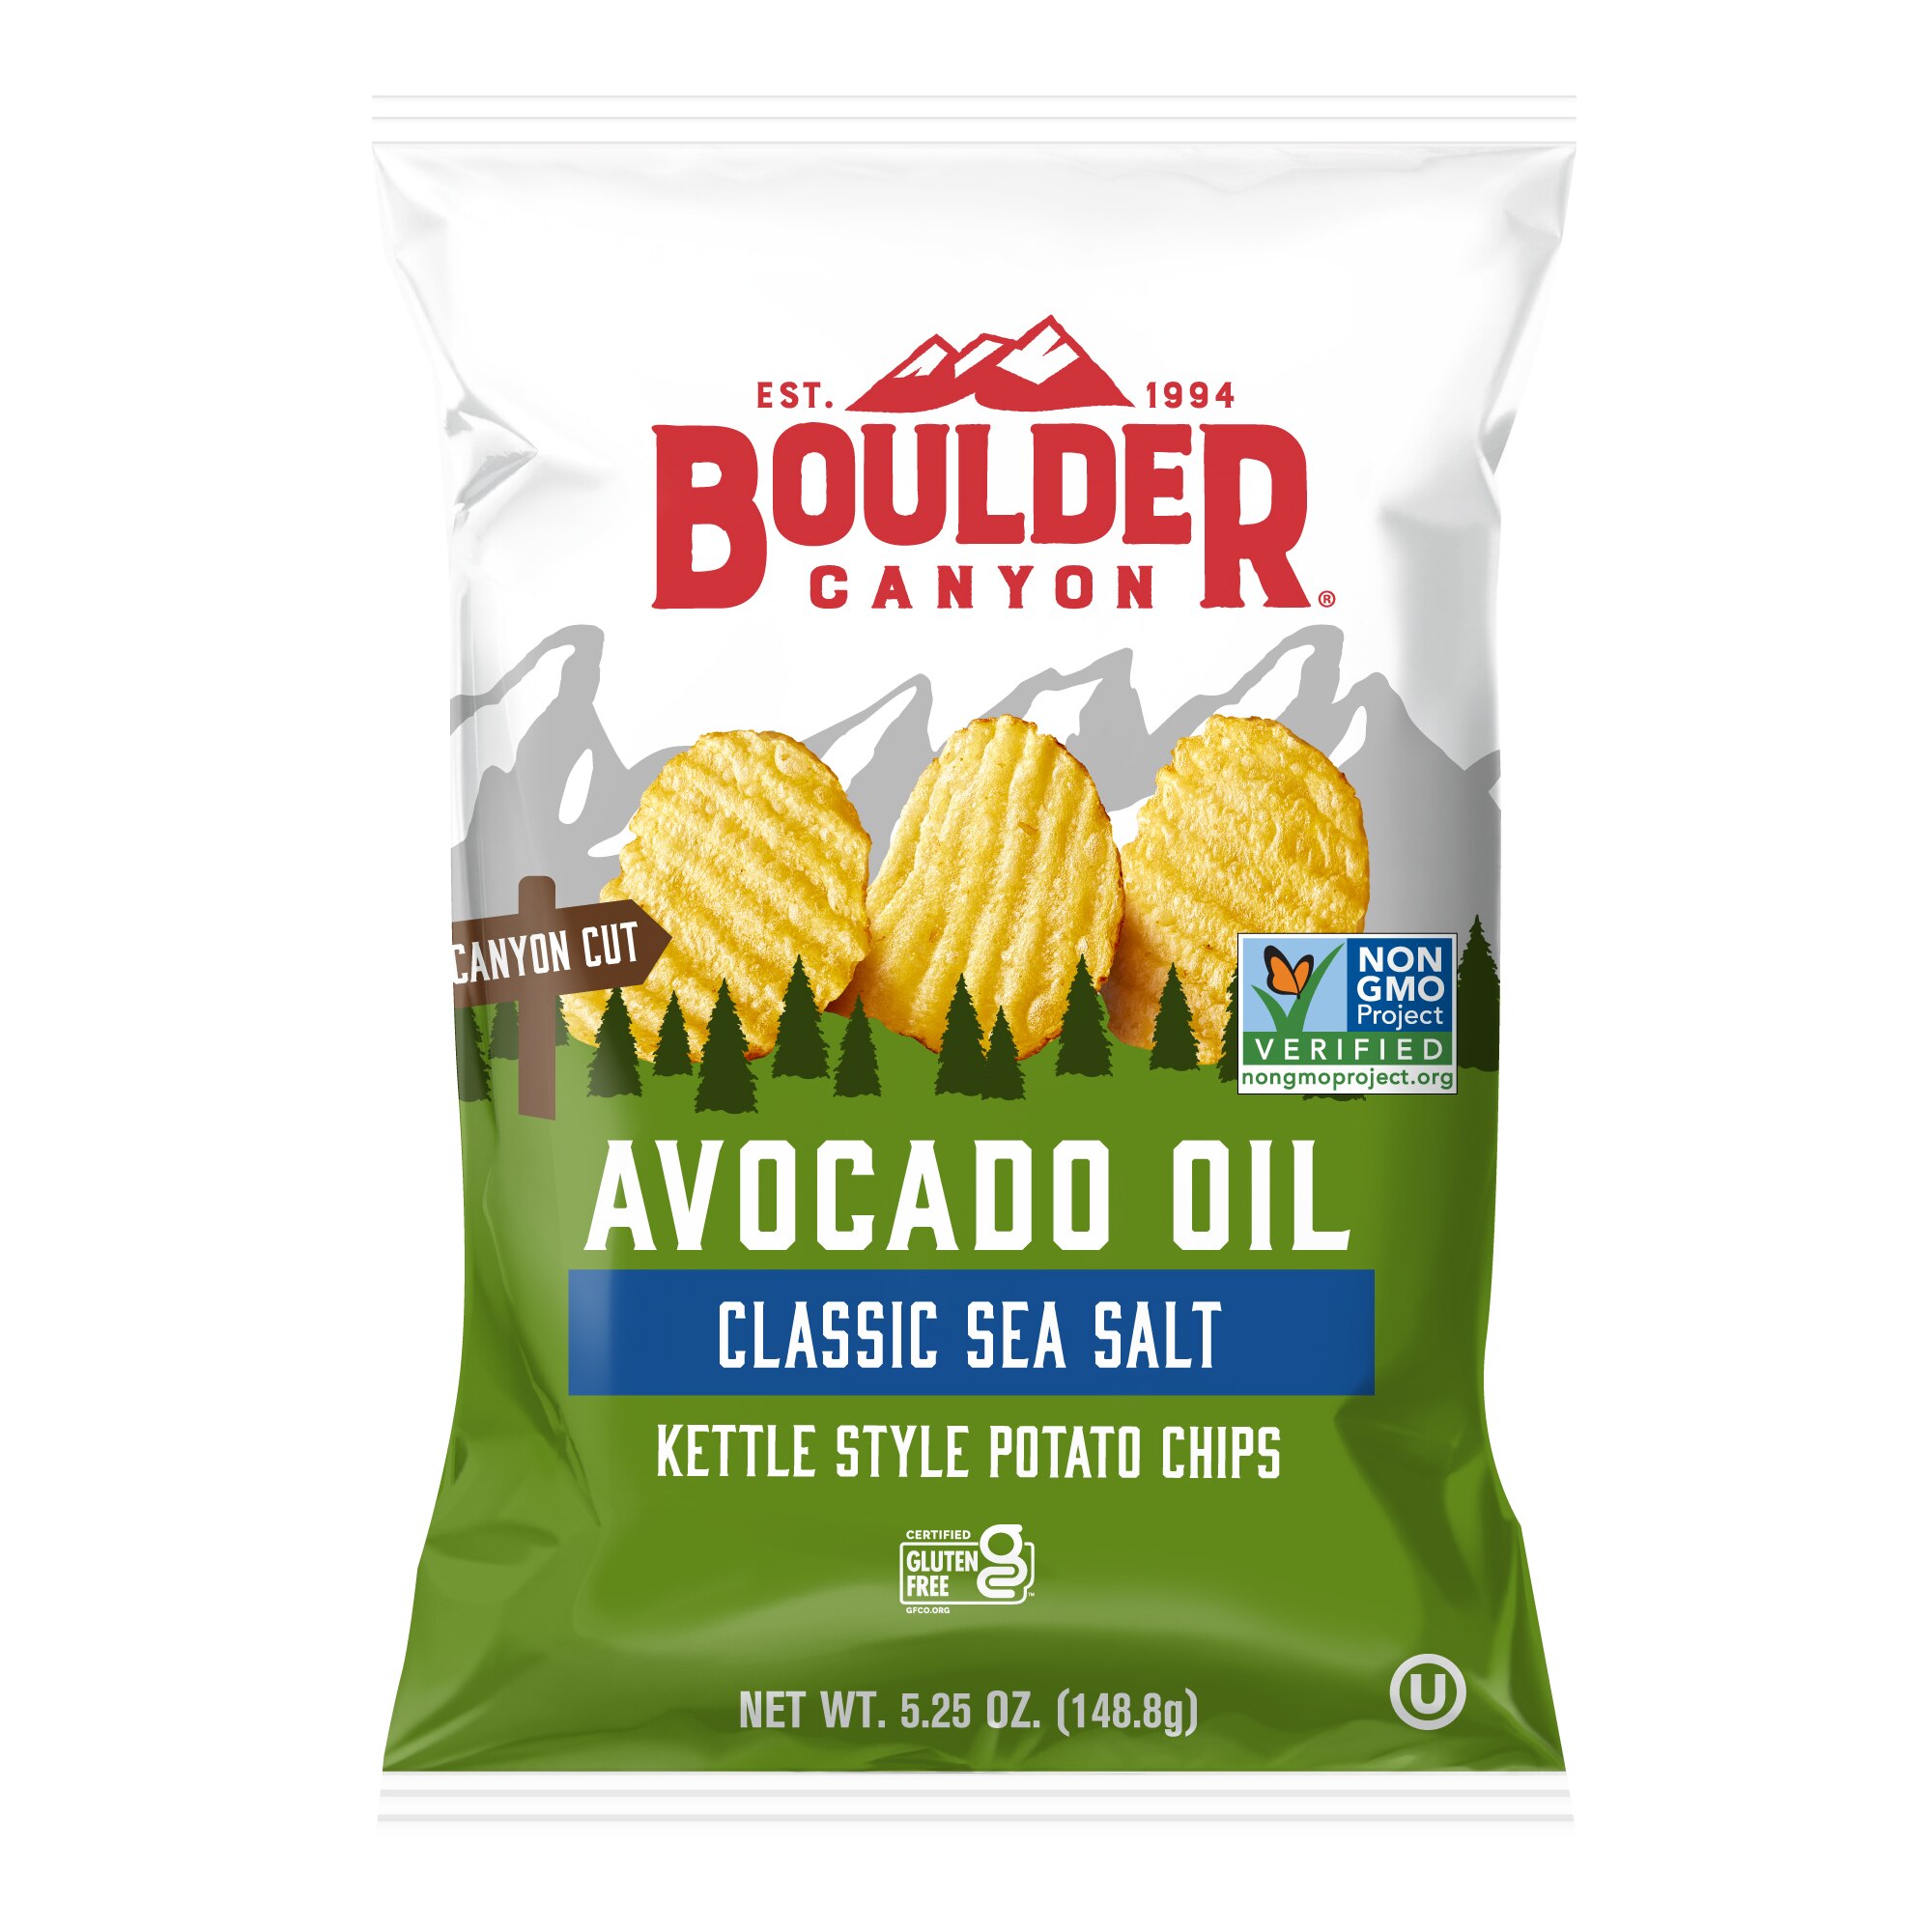 Boulder Canyon Classic Sea Salt Avocado Oil Kettle Chips, 5.25 oz